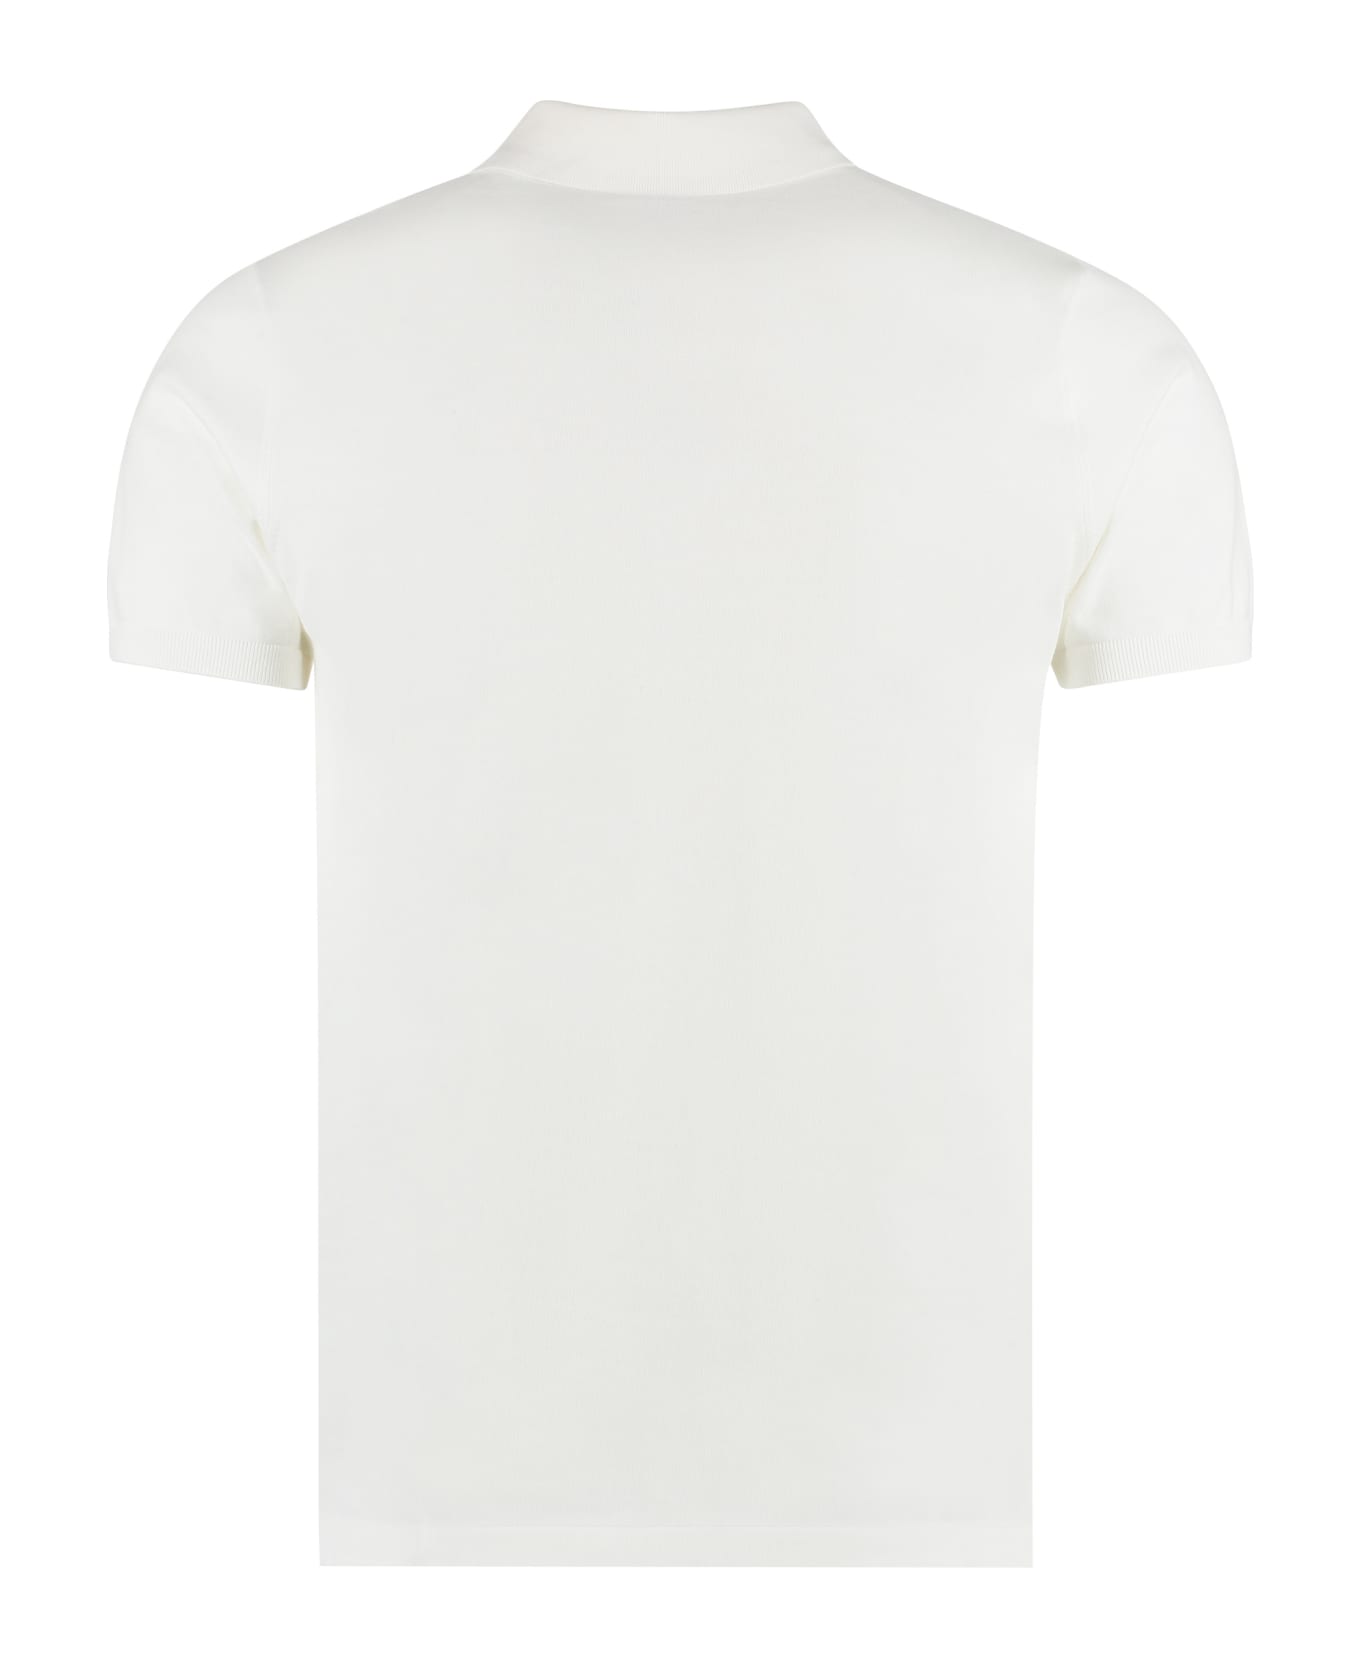 Aspesi Short Sleeve Cotton Polo Shirt - White シャツ